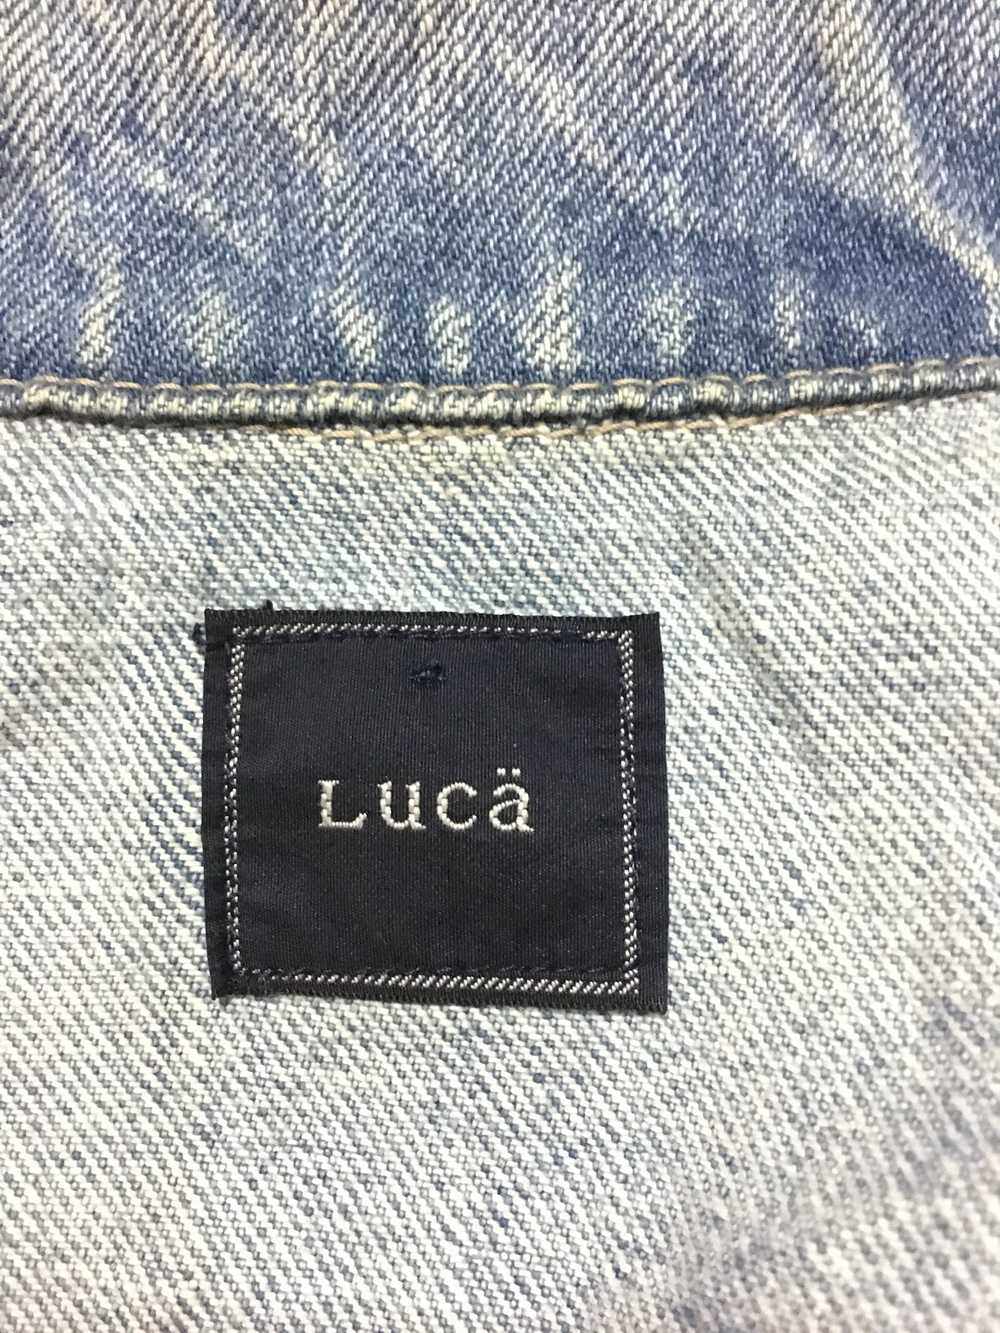 Japanese Brand Luca Denim Jacket - image 9